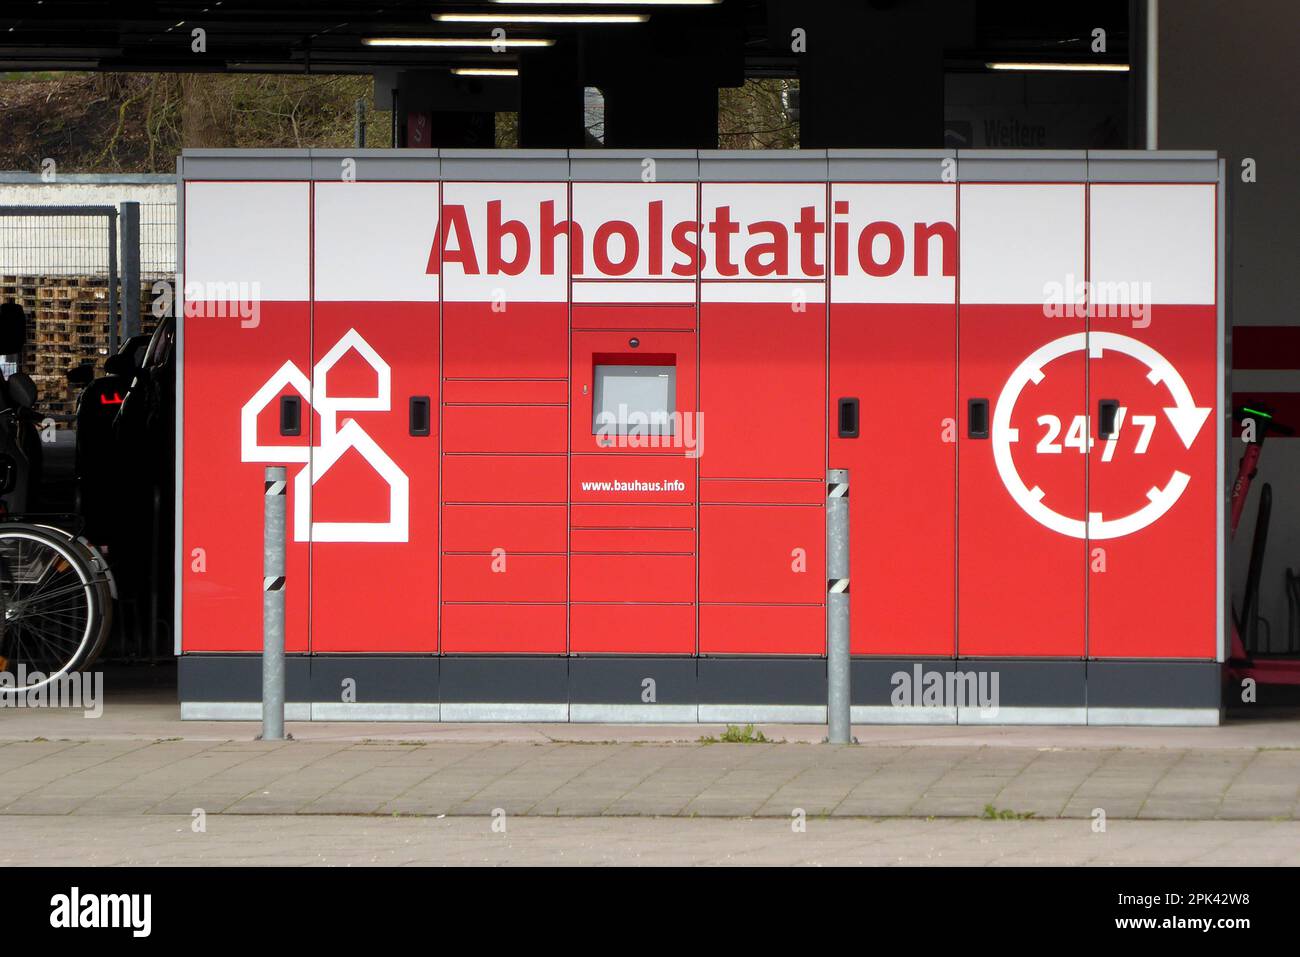 Bauhaus Abholstation Stock Photo